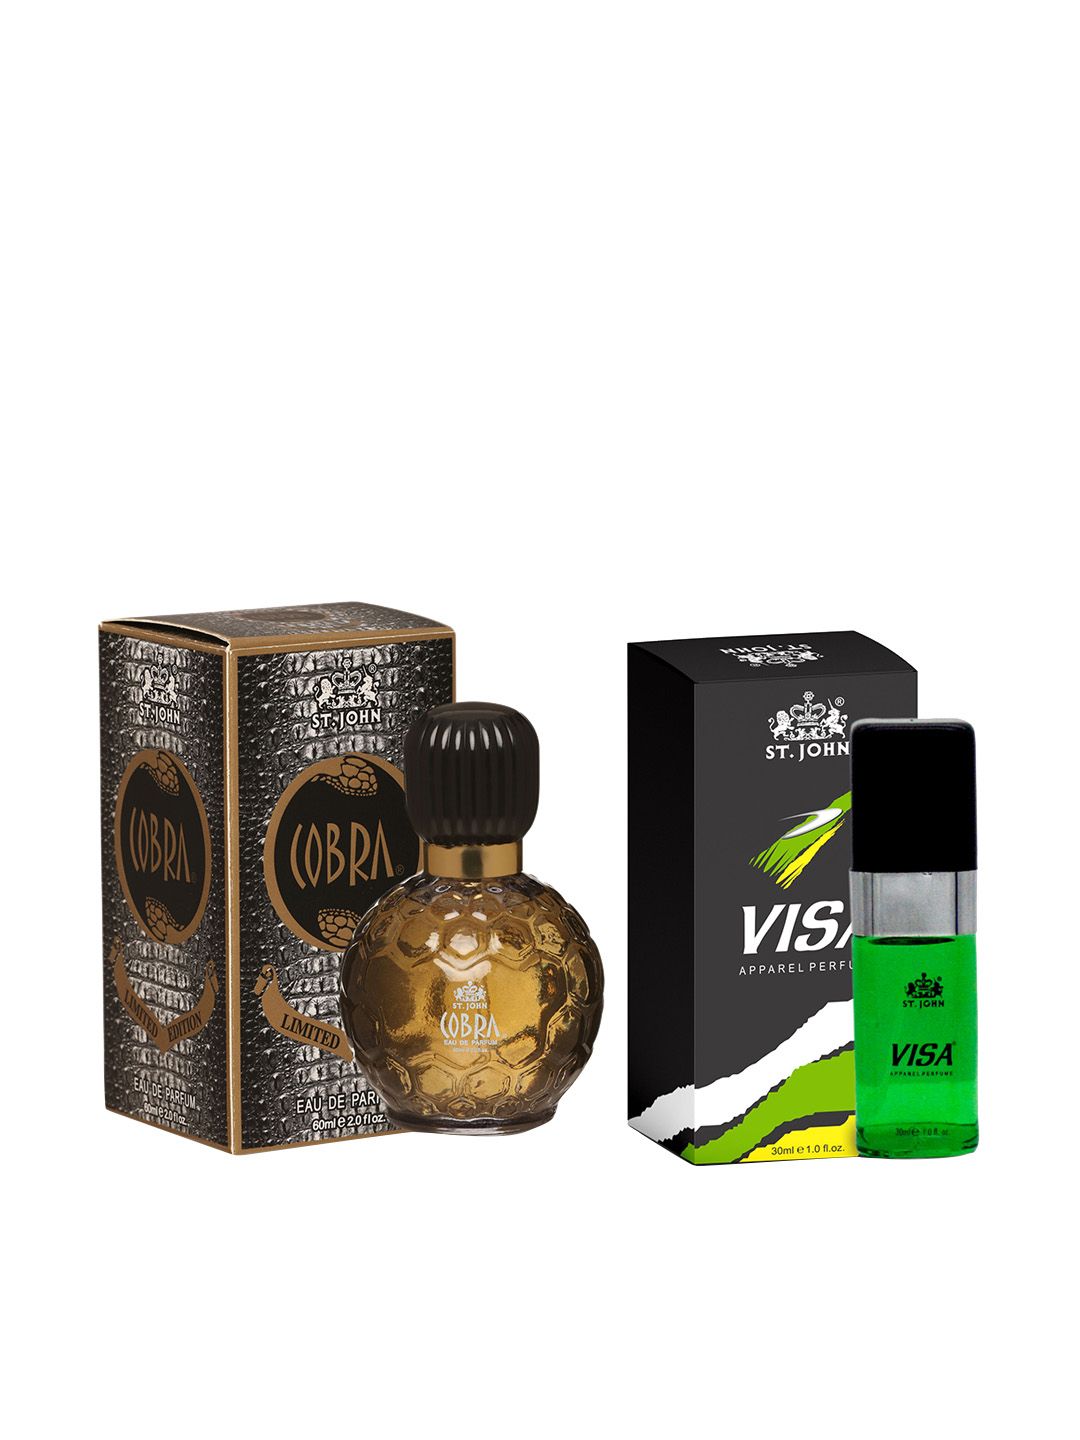 St. John Set of Cobra Eau De Parfum 60 ml & Visa Perfume 30 ml Price in India